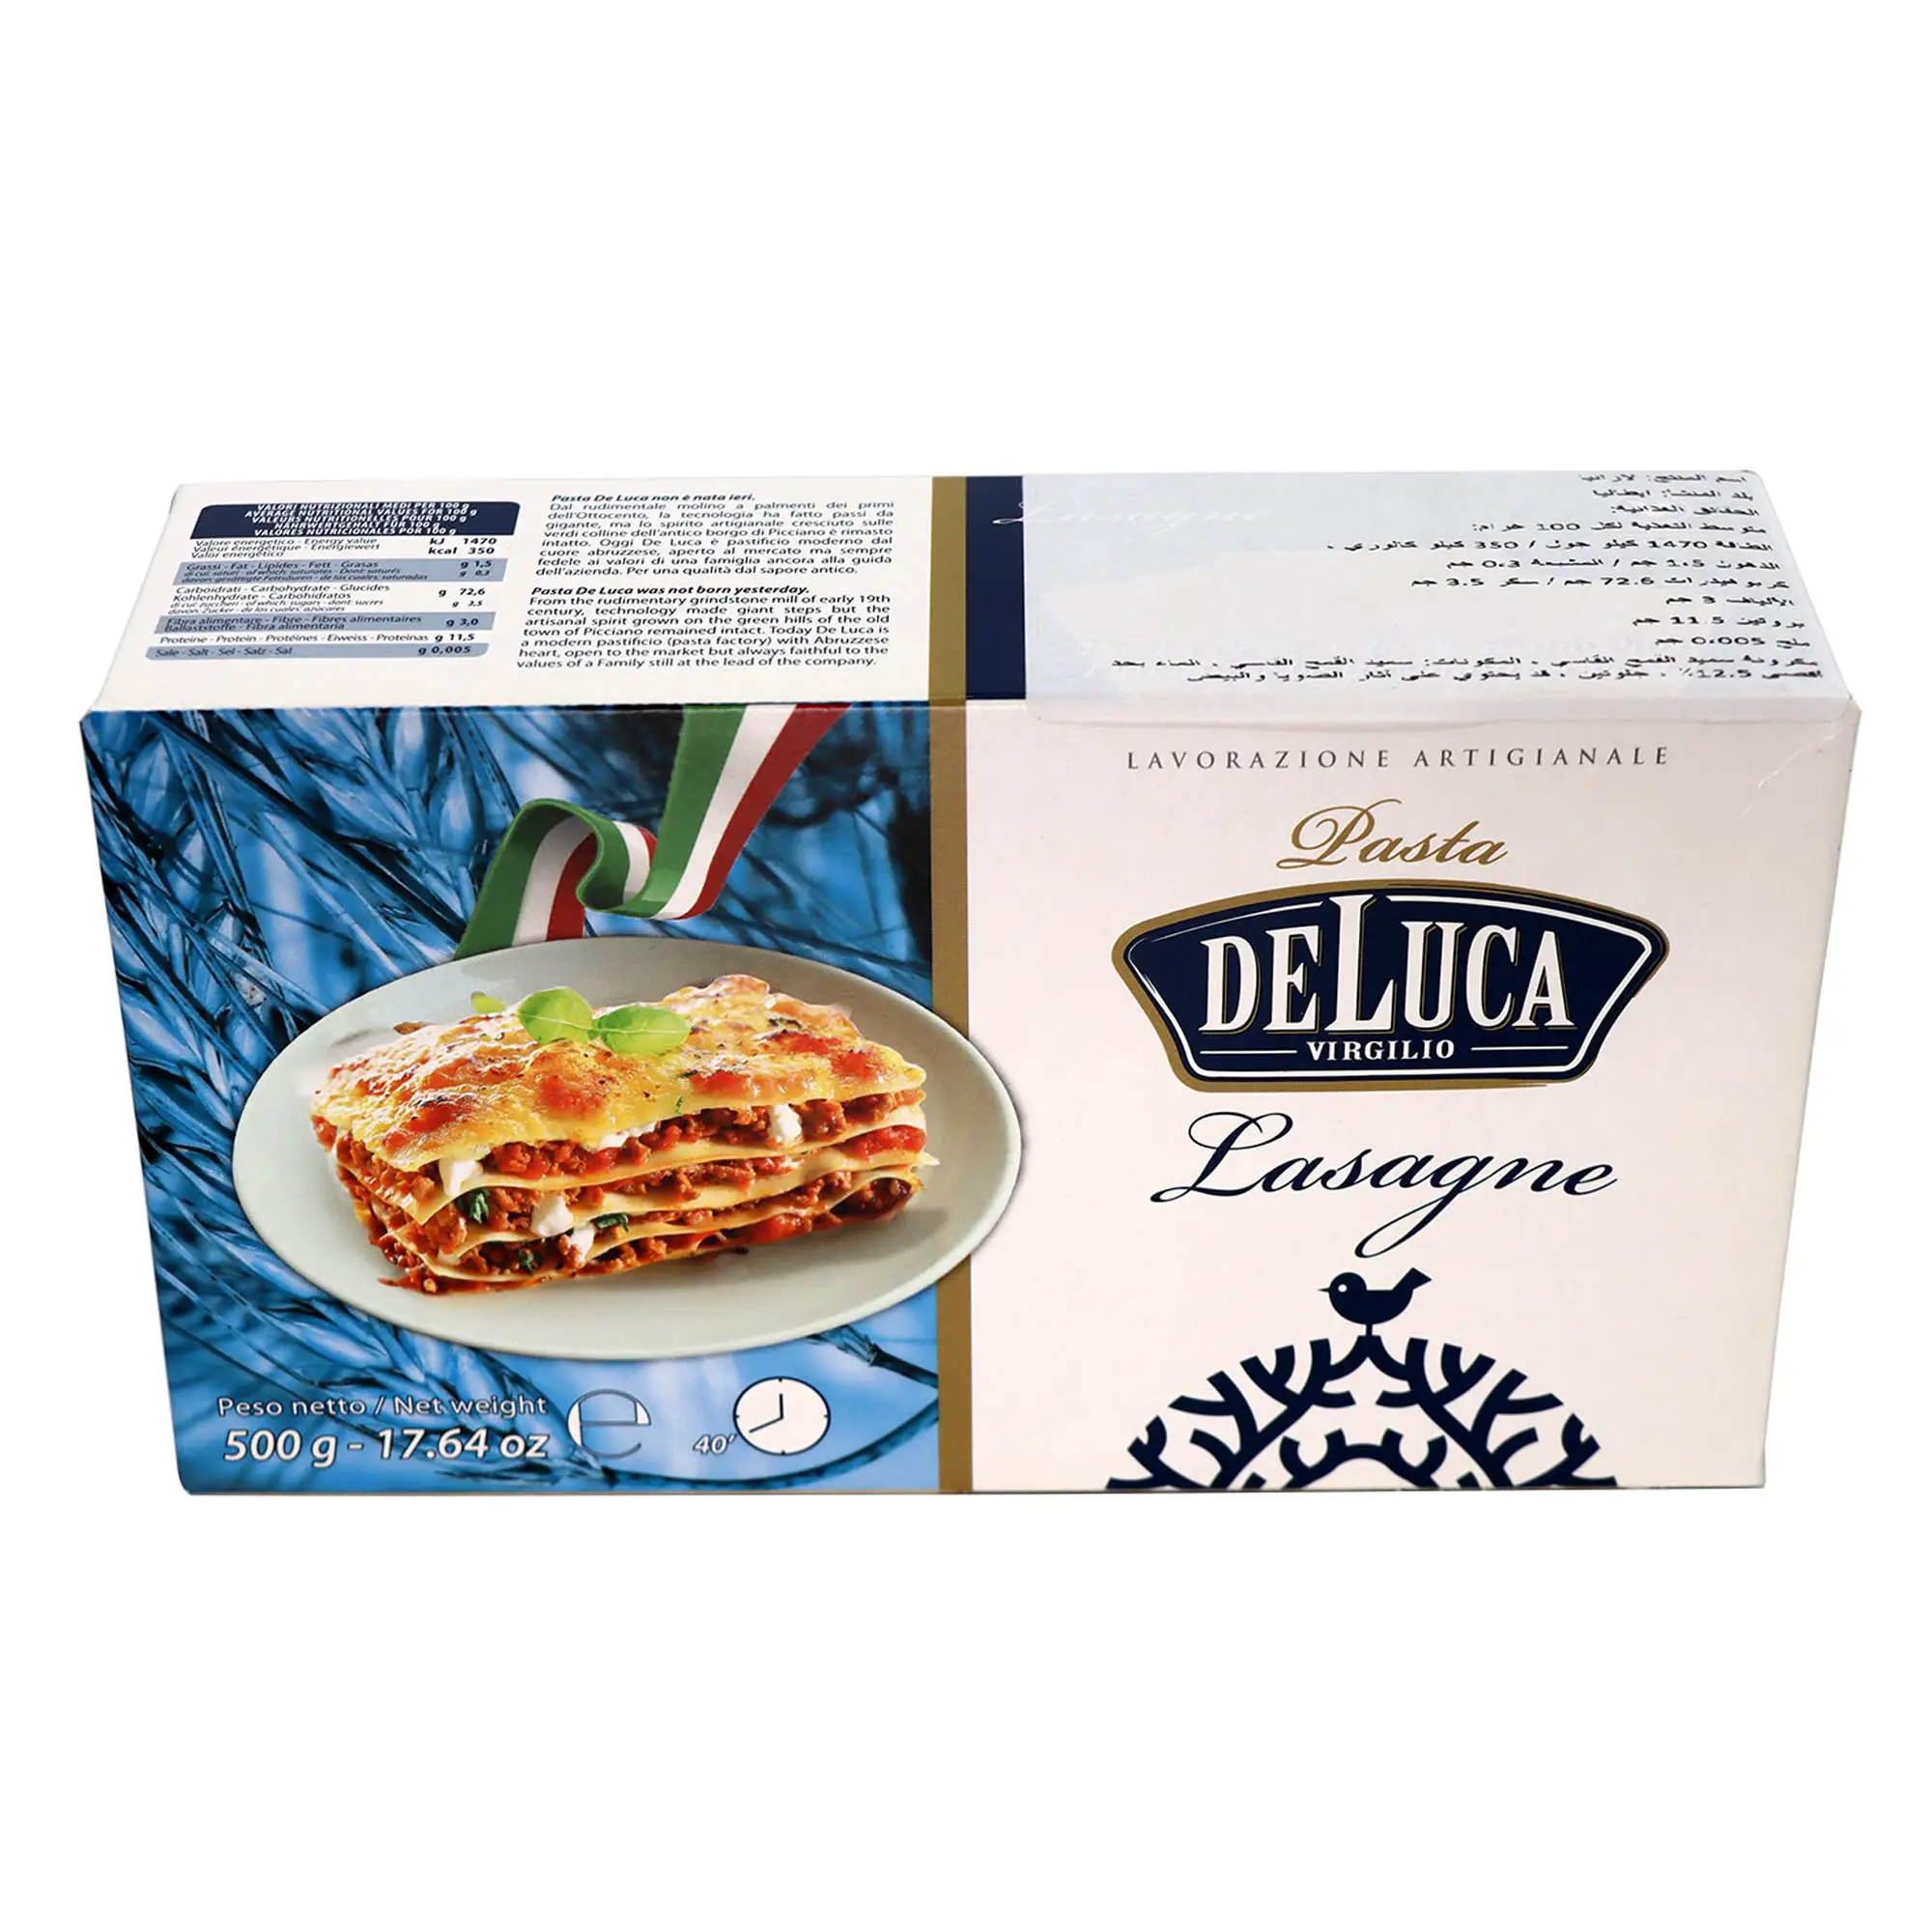 KAC - Deluca lasagna pasta 500 g